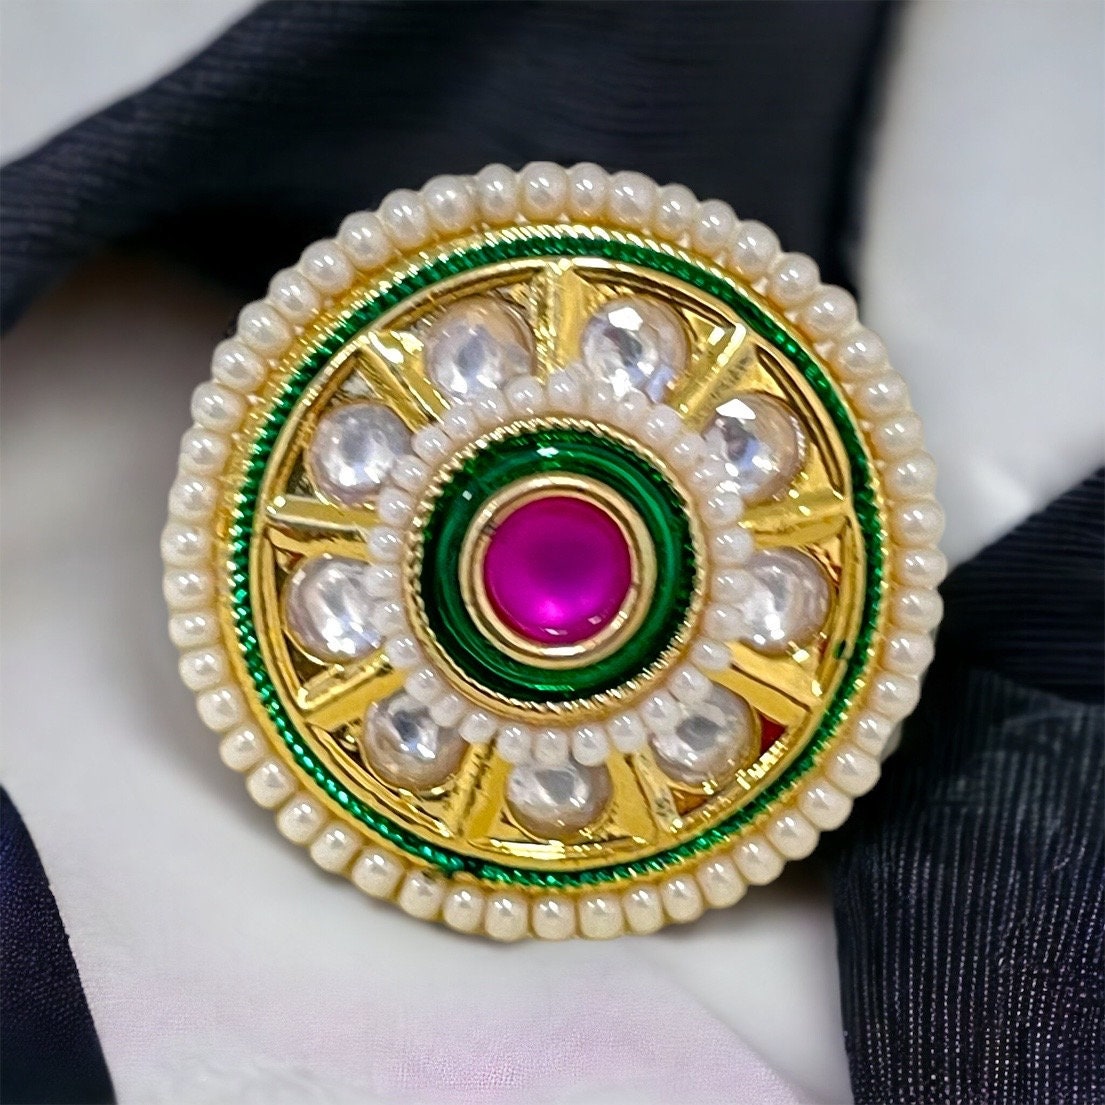 Rajputi jewellery ring | Diamond jewelry designs, Hand jewelry, Gold jewelry  fashion